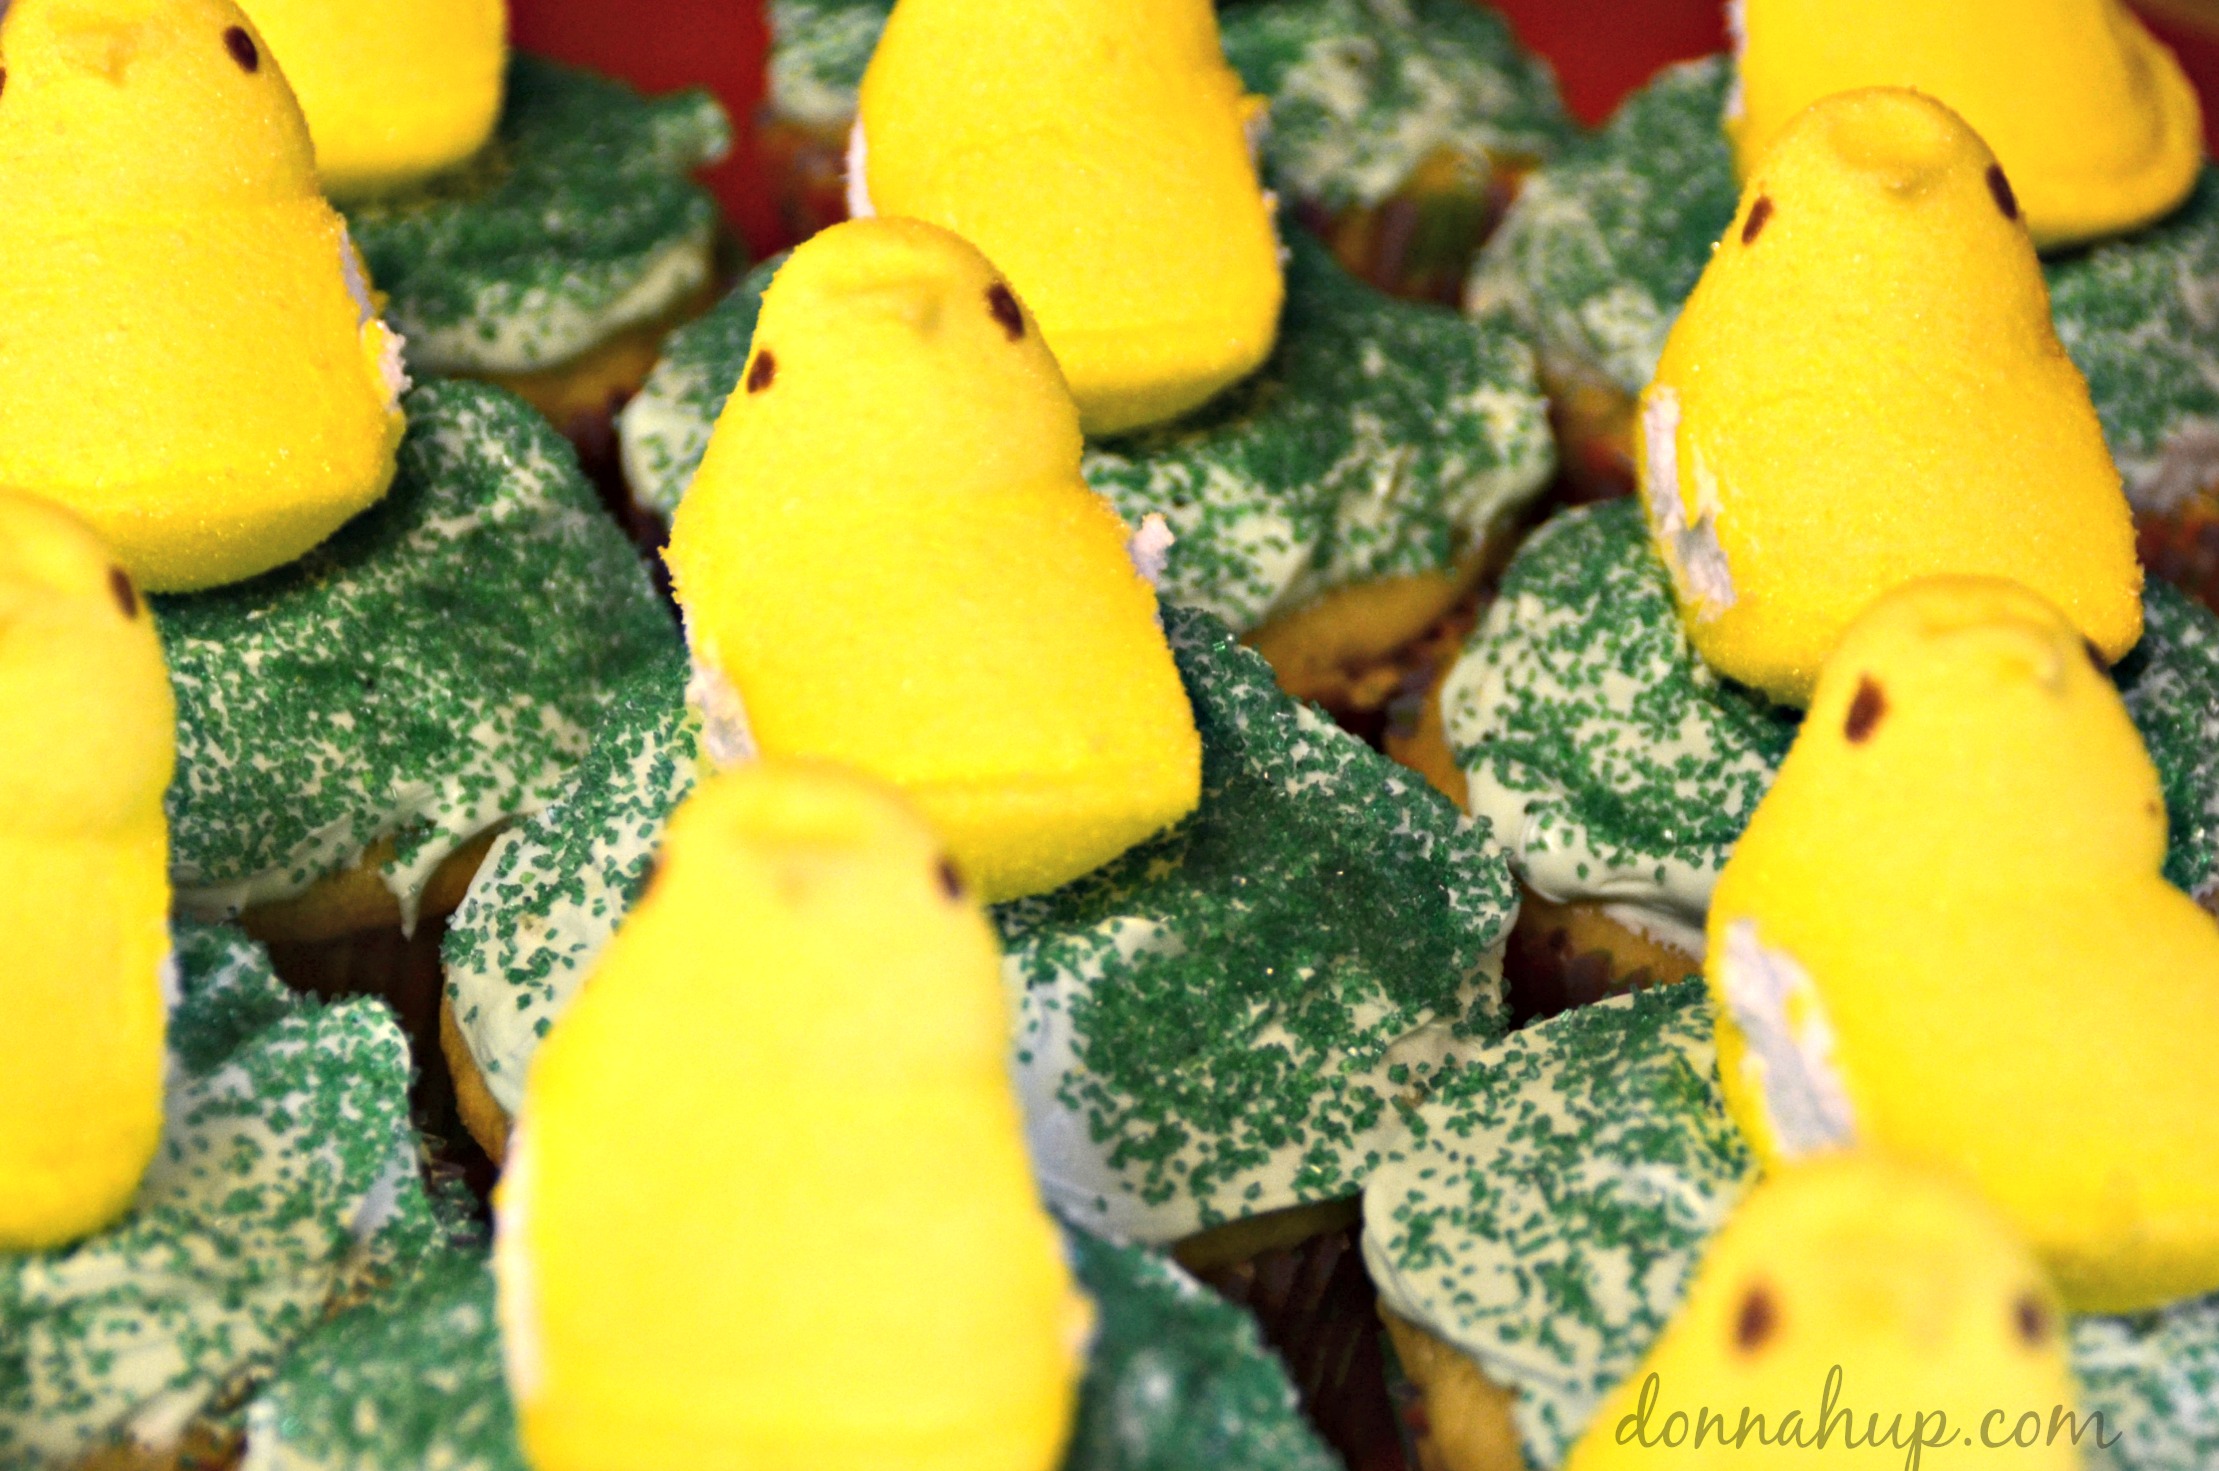 Easter Peep Surprise Cupcakes